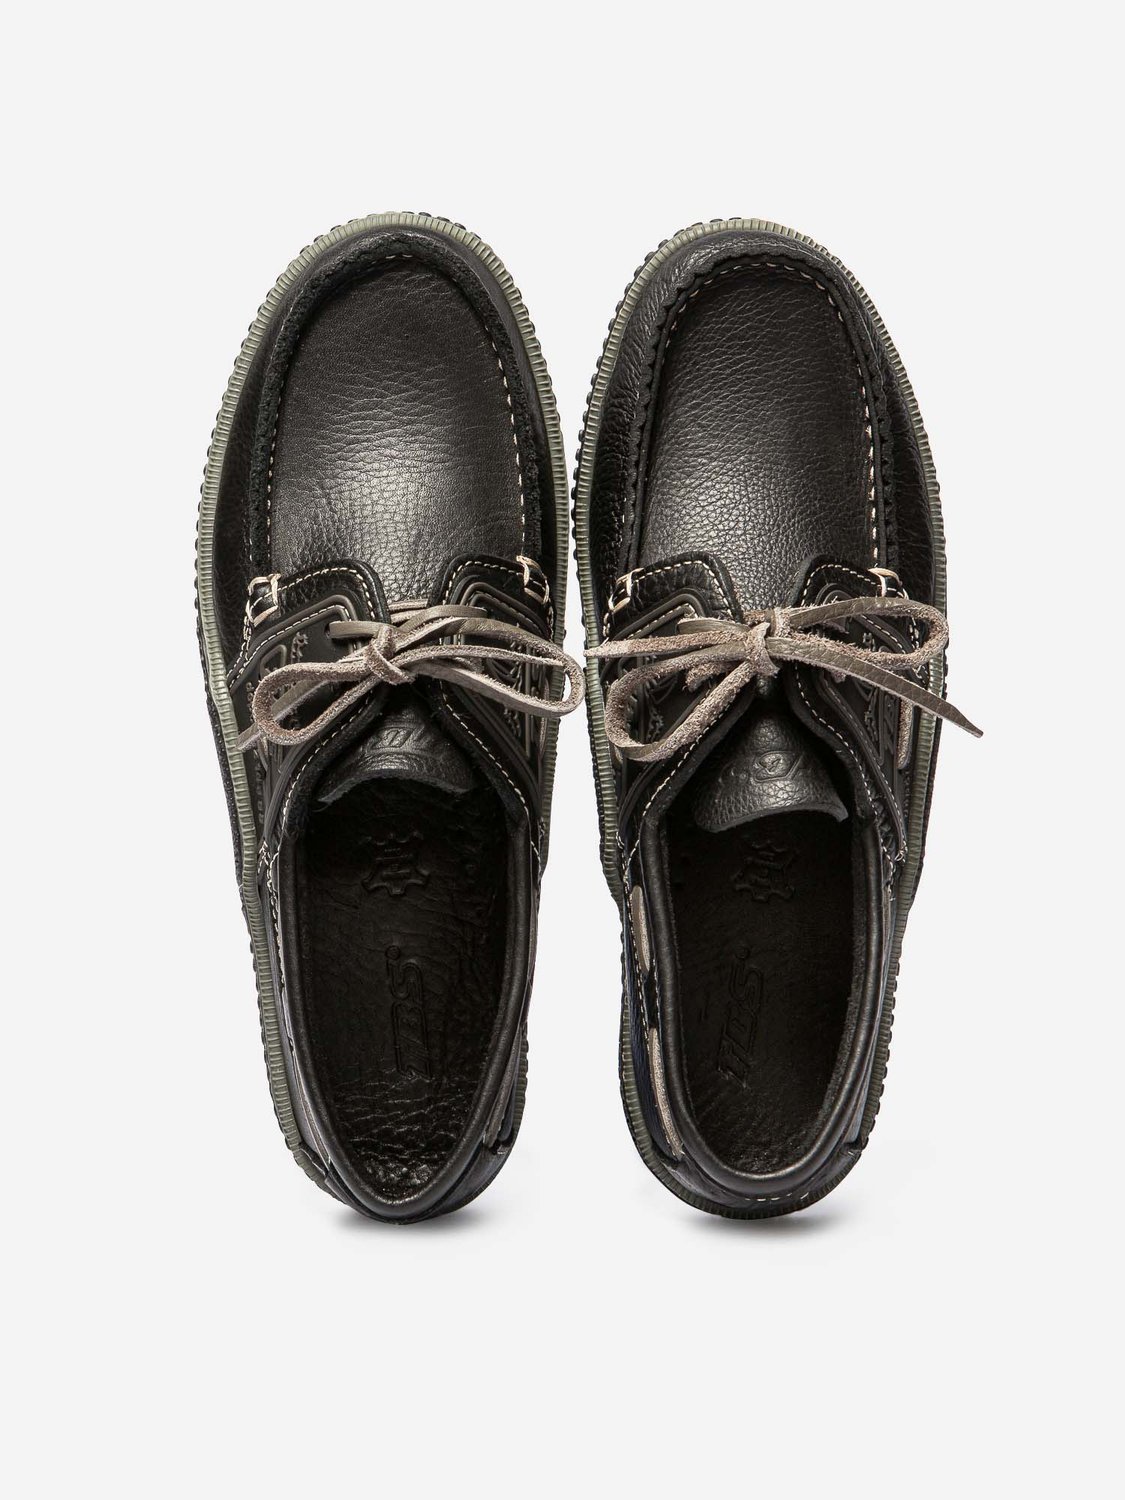 Chaussures Bateau Homme Cuir Noir